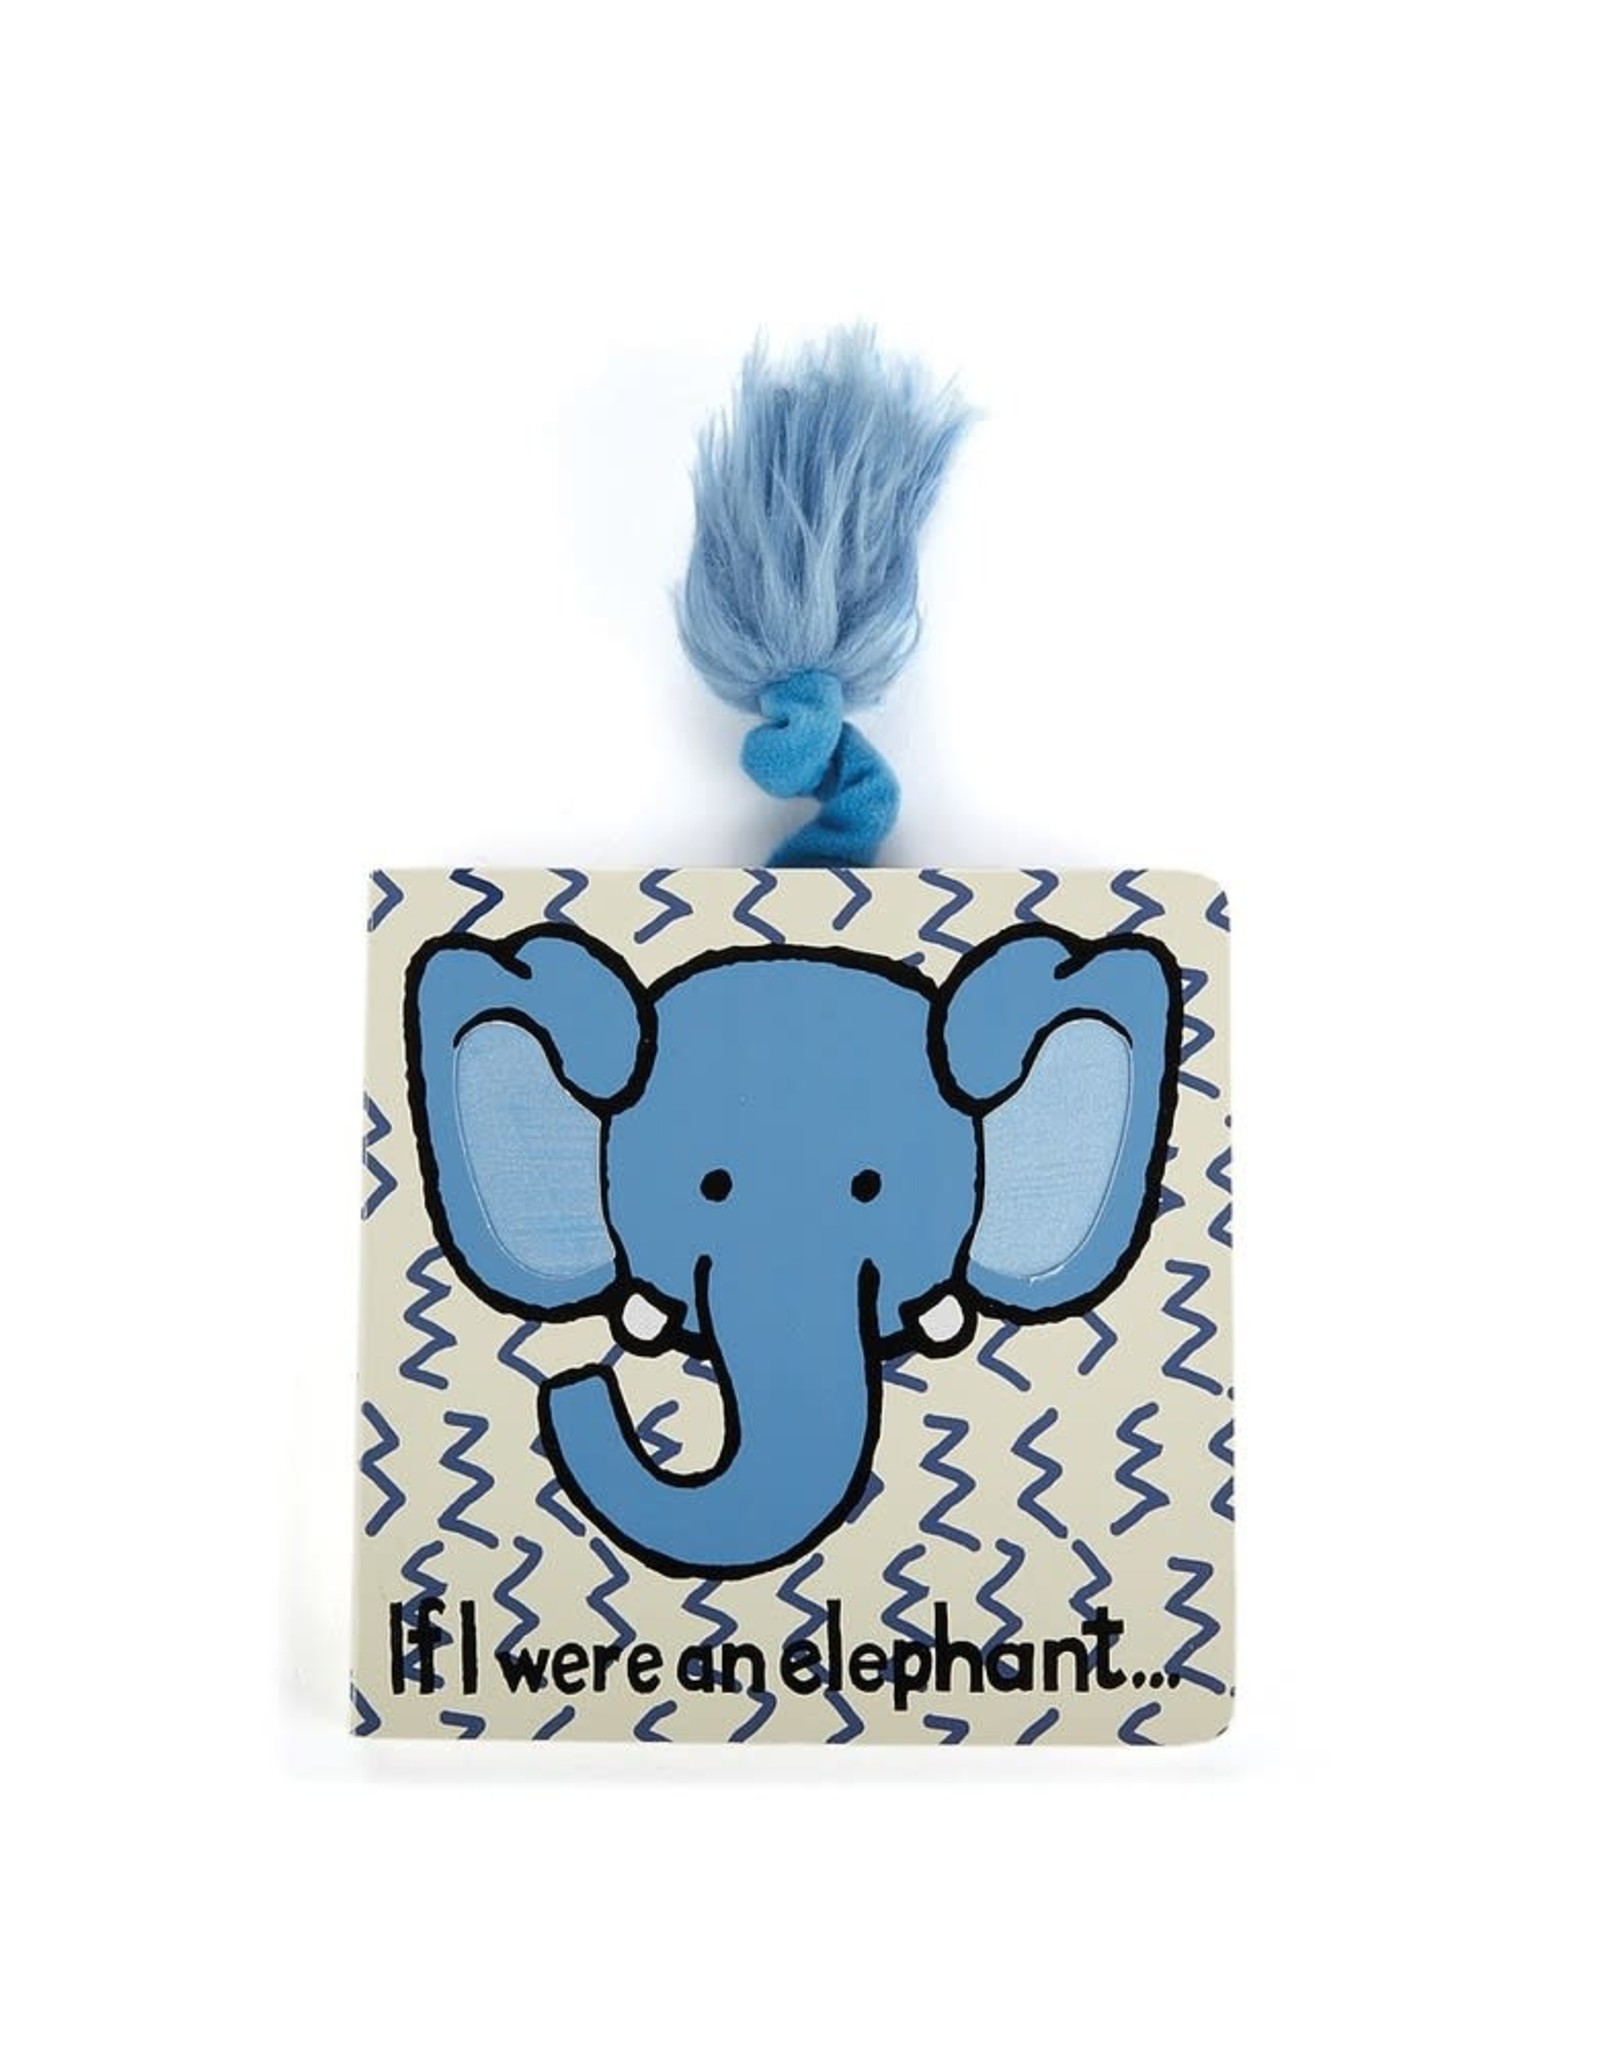 JELLYCAT IF I WERE AN ELEPHANT